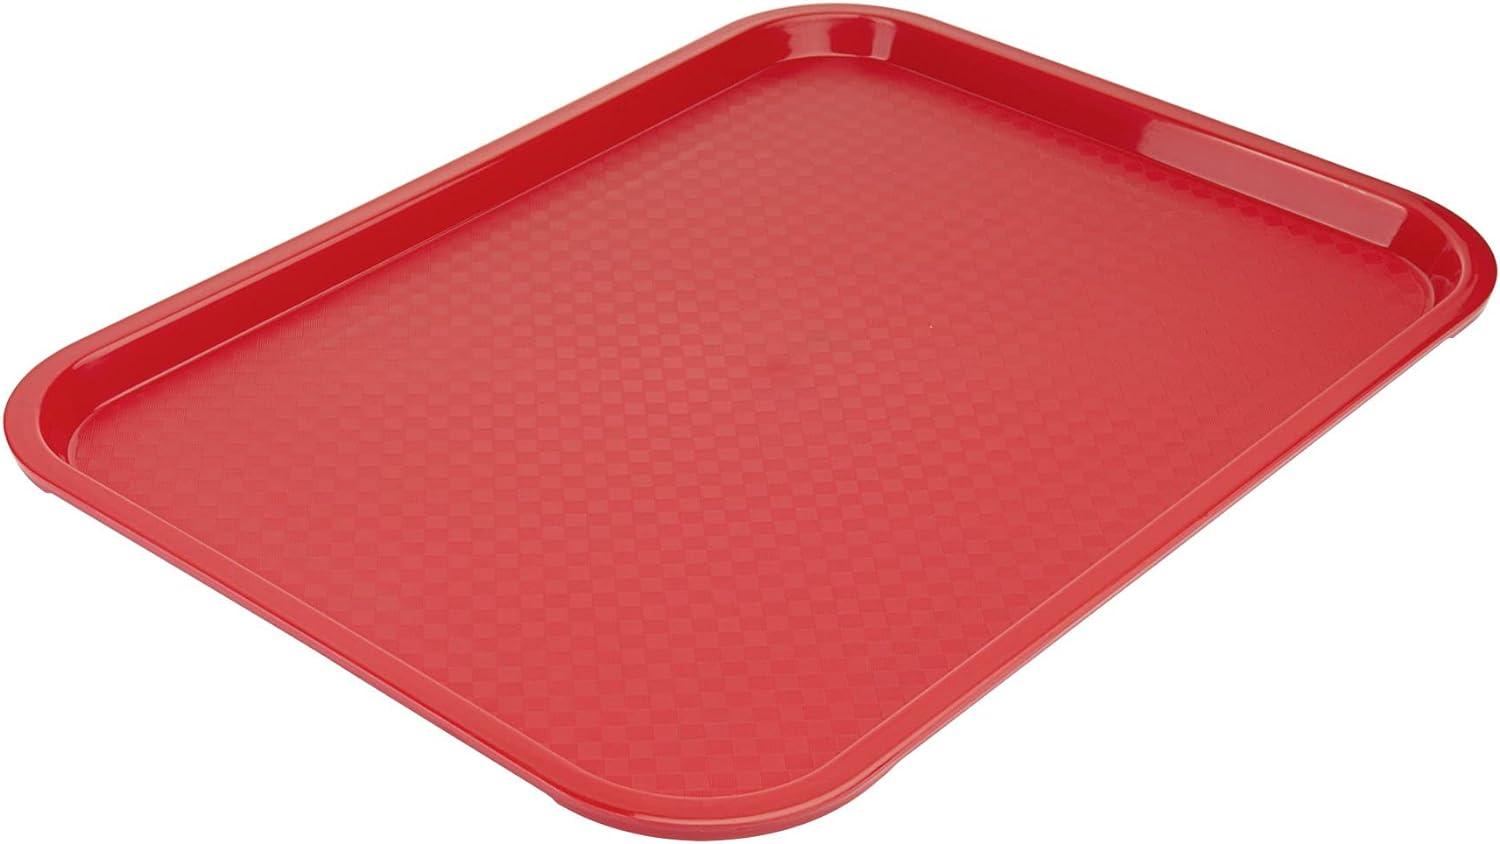 Contacto Serviertablett rechteckig 40 x 30 cm rot Polypropylen rutschhemmend Gastro-Tablett Bild 1